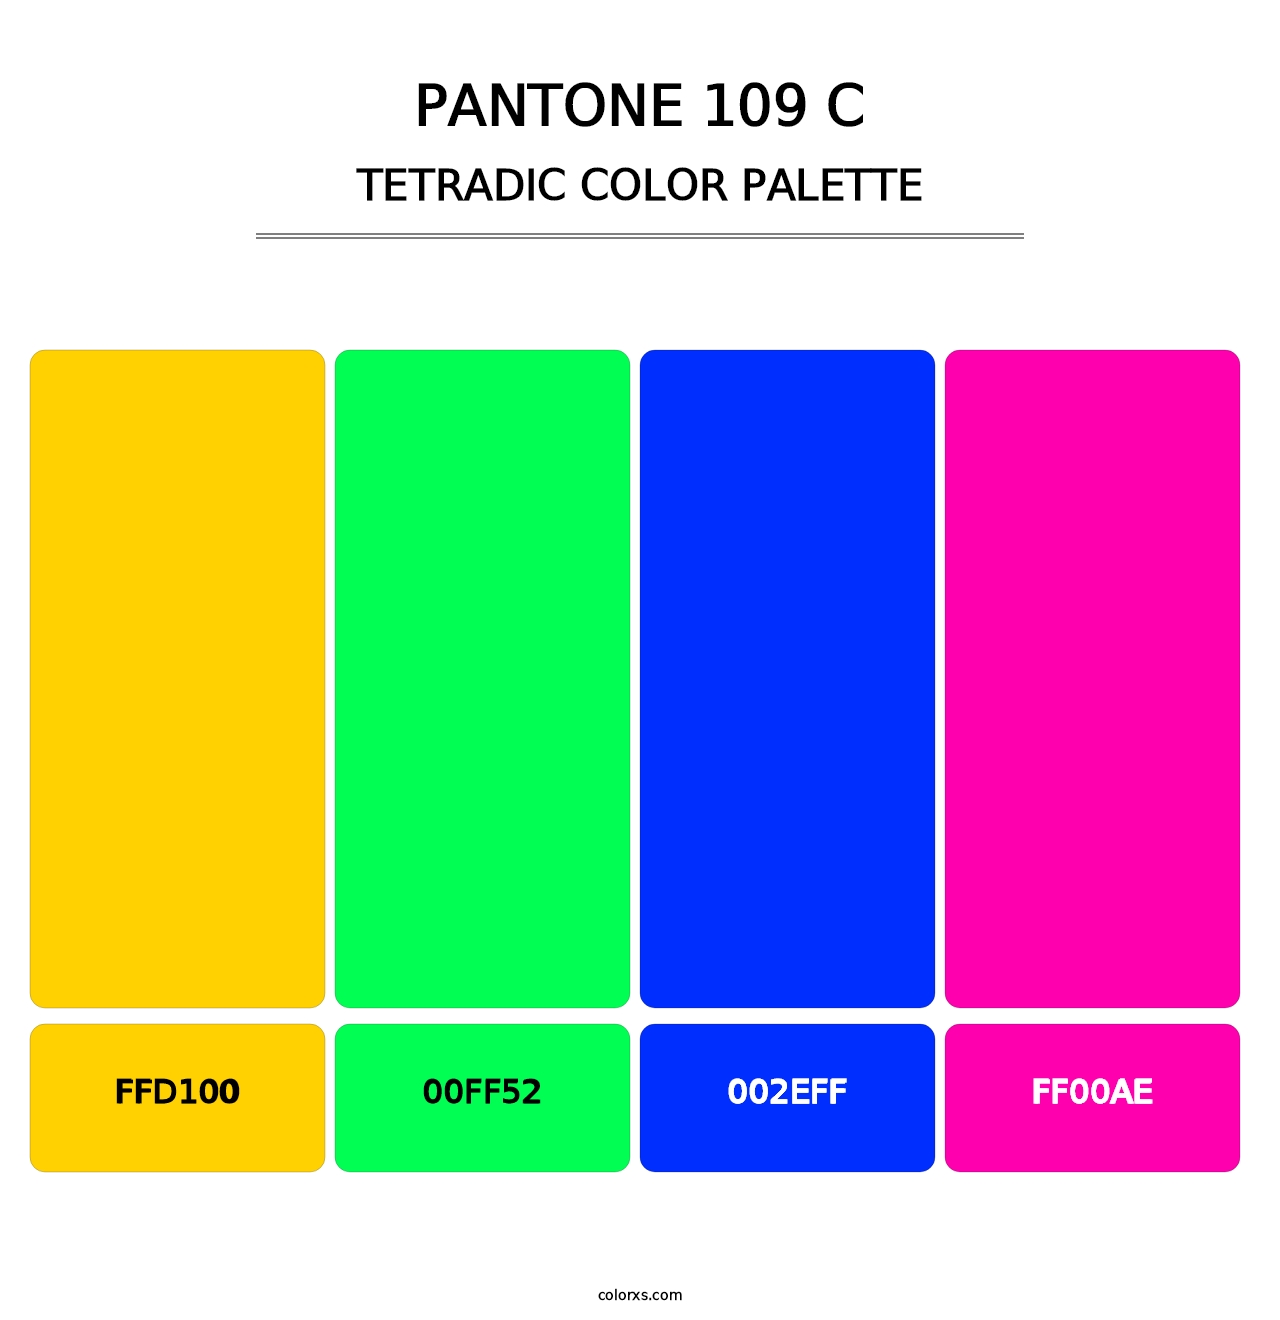 PANTONE 109 C - Tetradic Color Palette